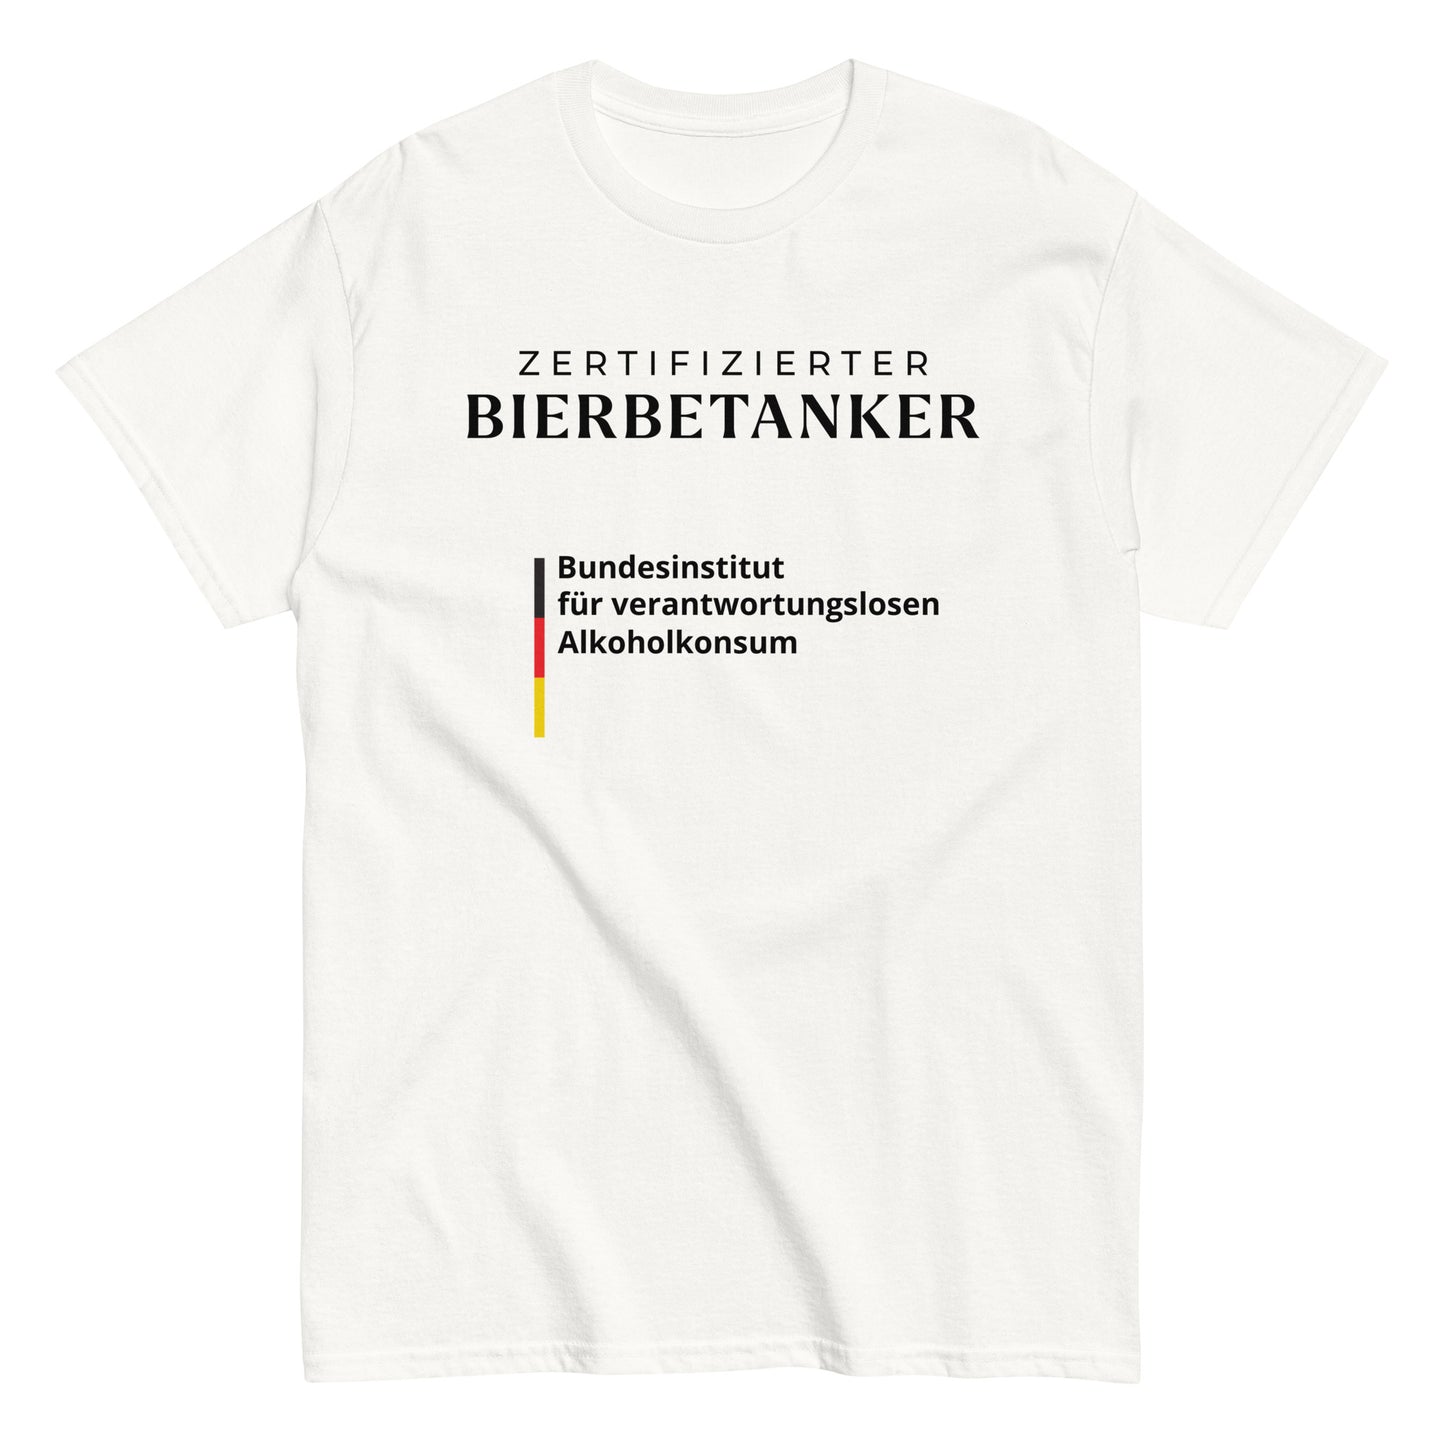 ZERTIFIZIERTER BIERBETANKER T-Shirt